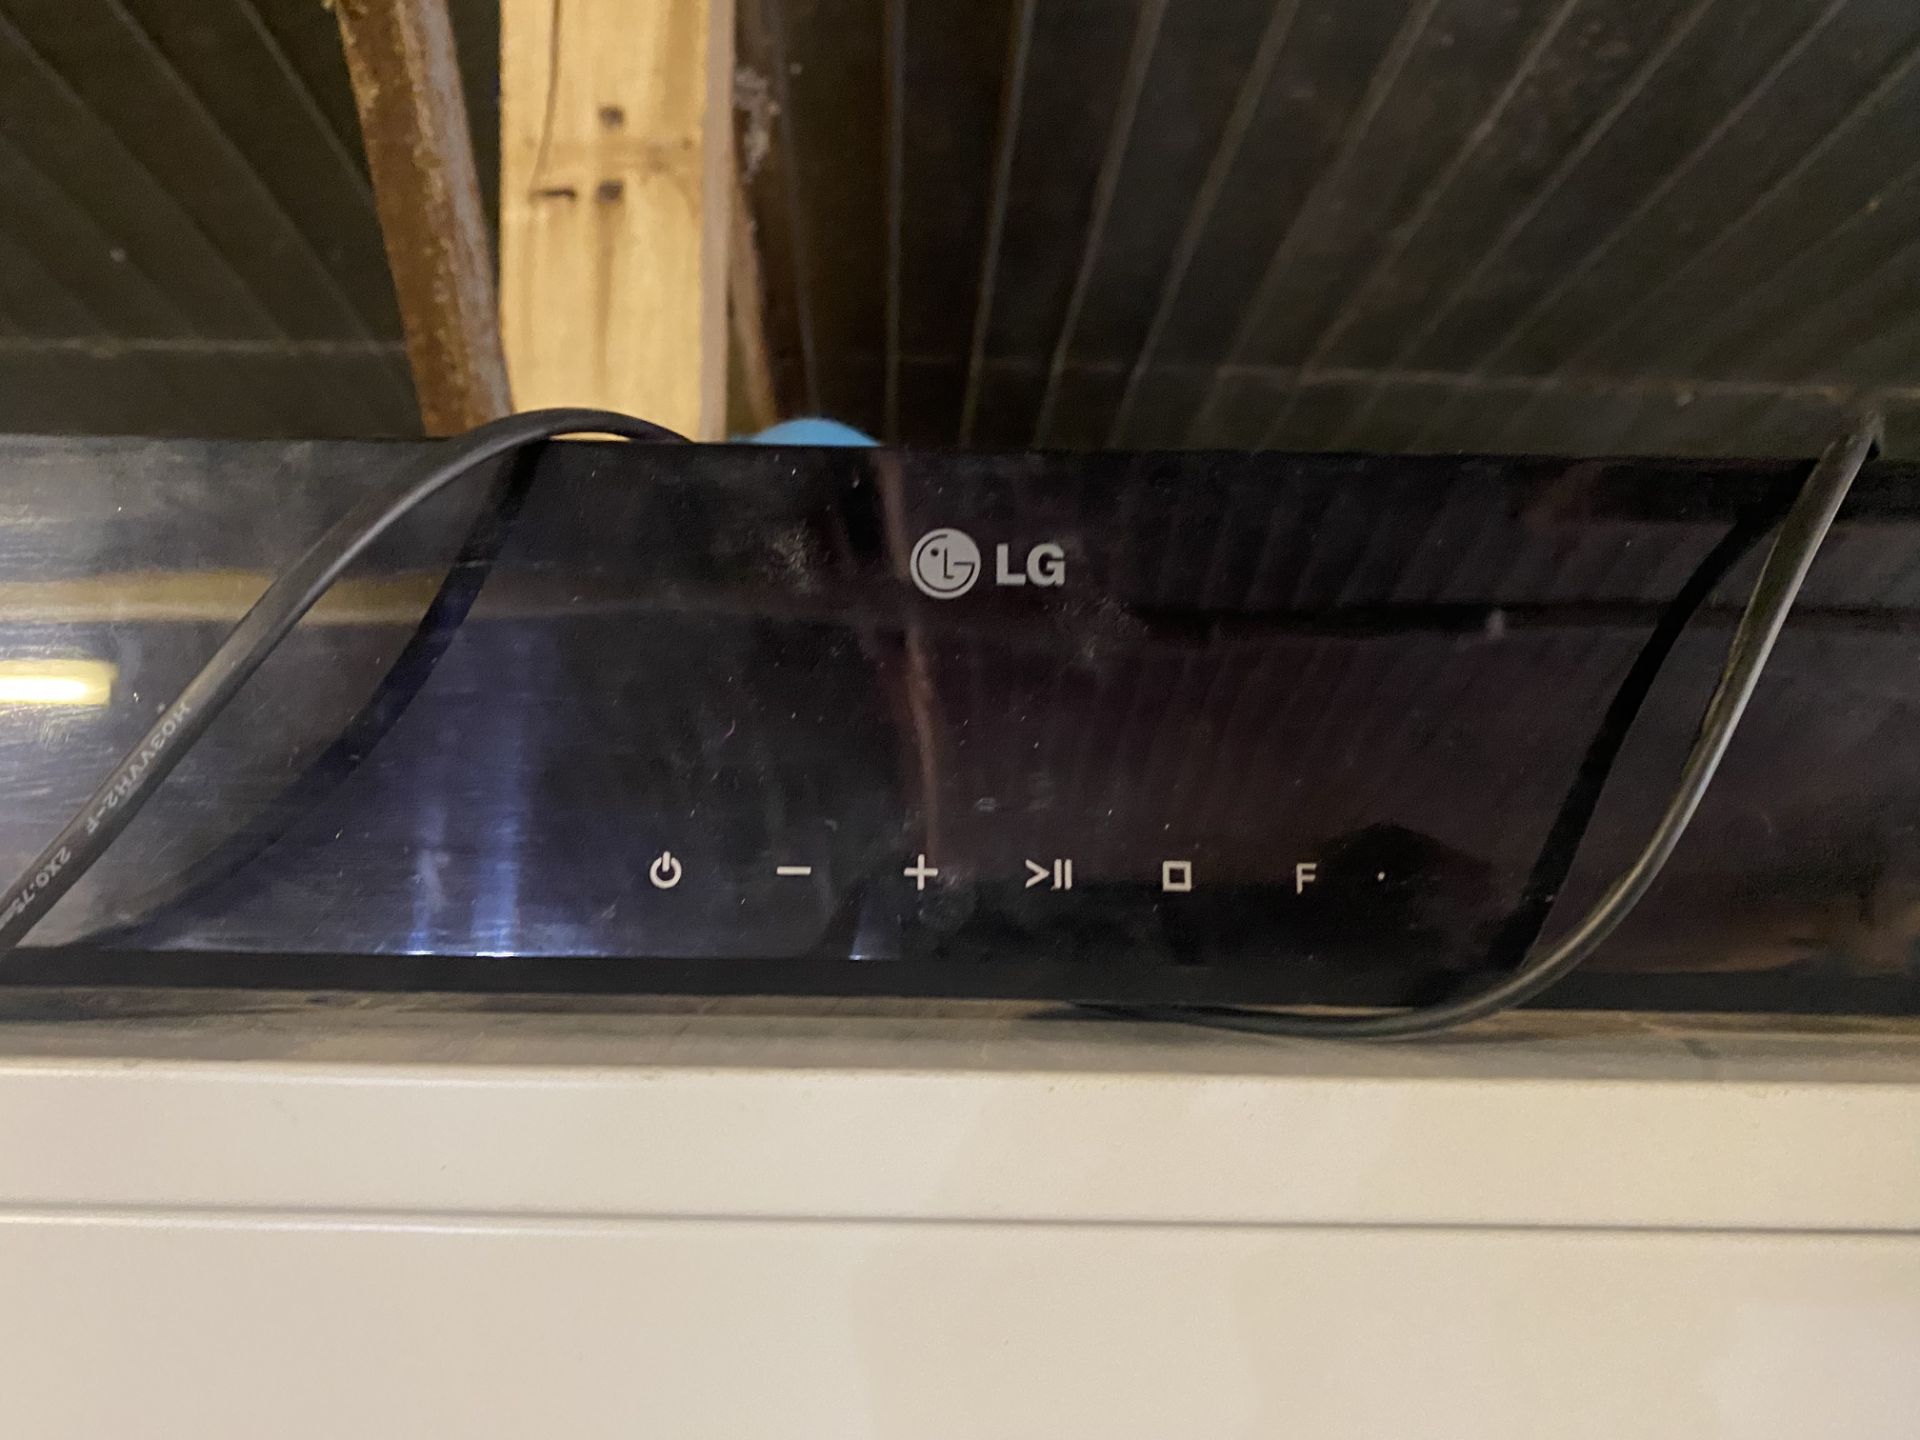 LG Sound Bar, model NB2420A - Image 3 of 7